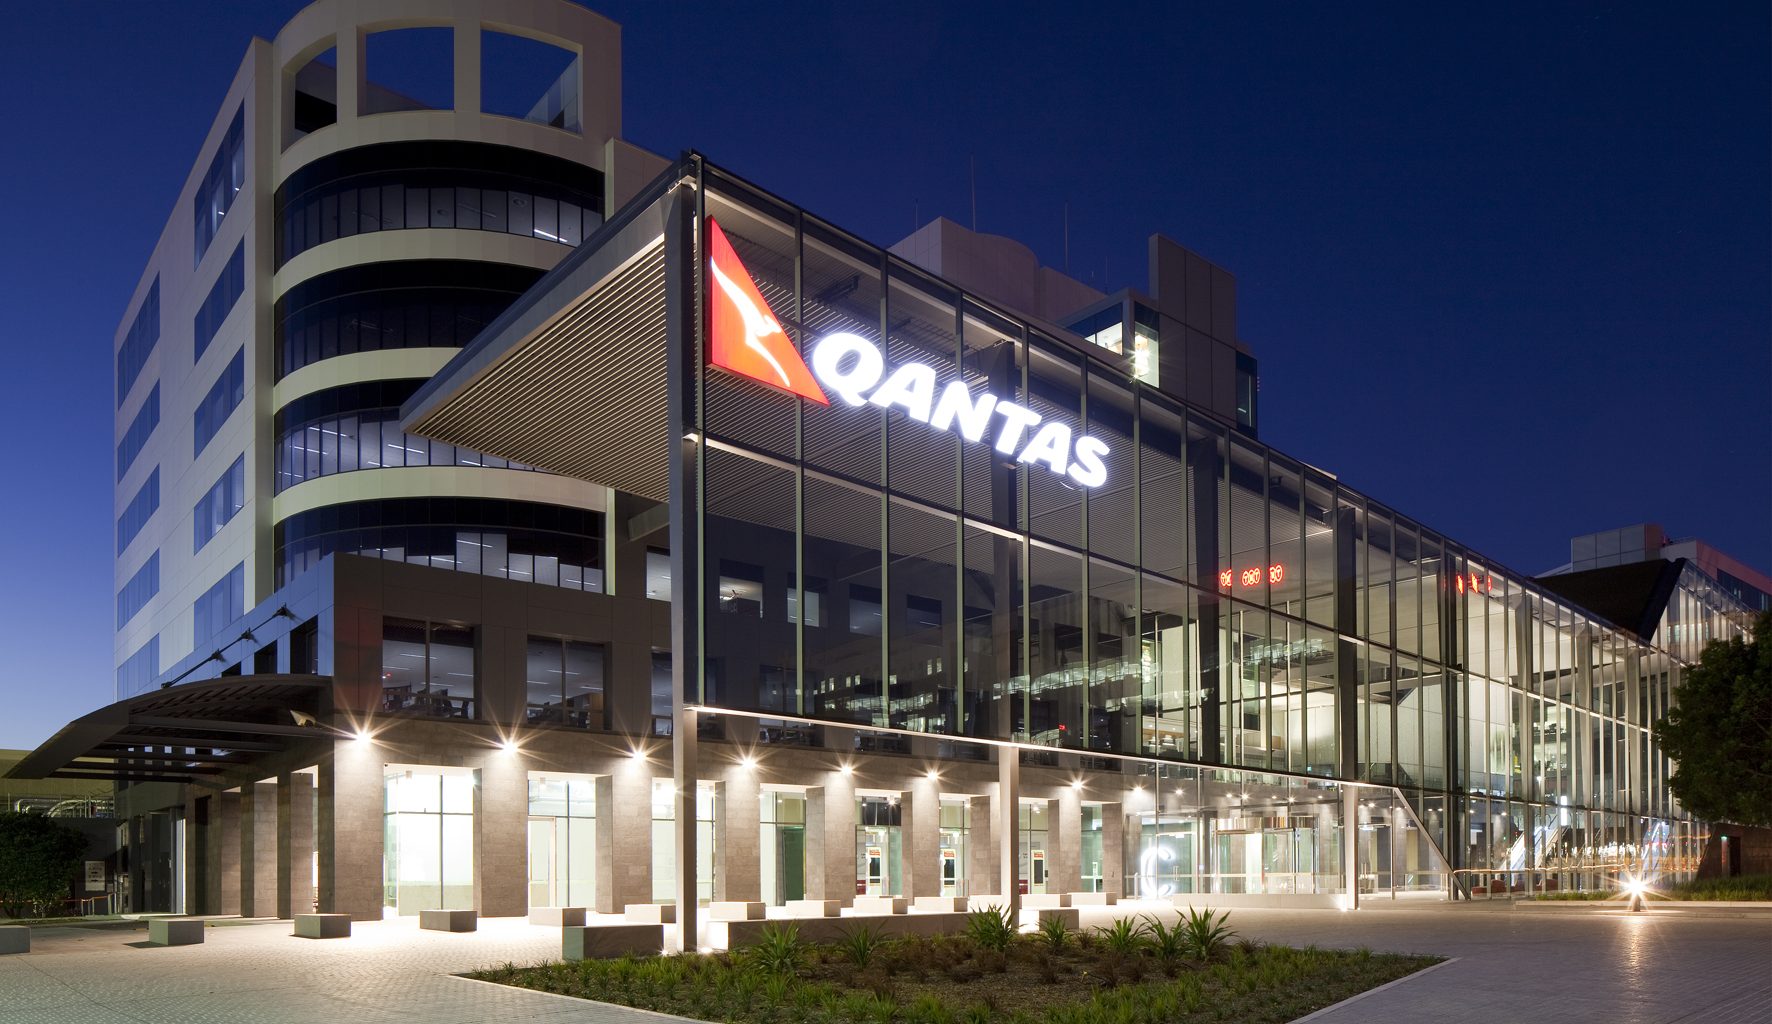 qantas call centres in crisis according to staff